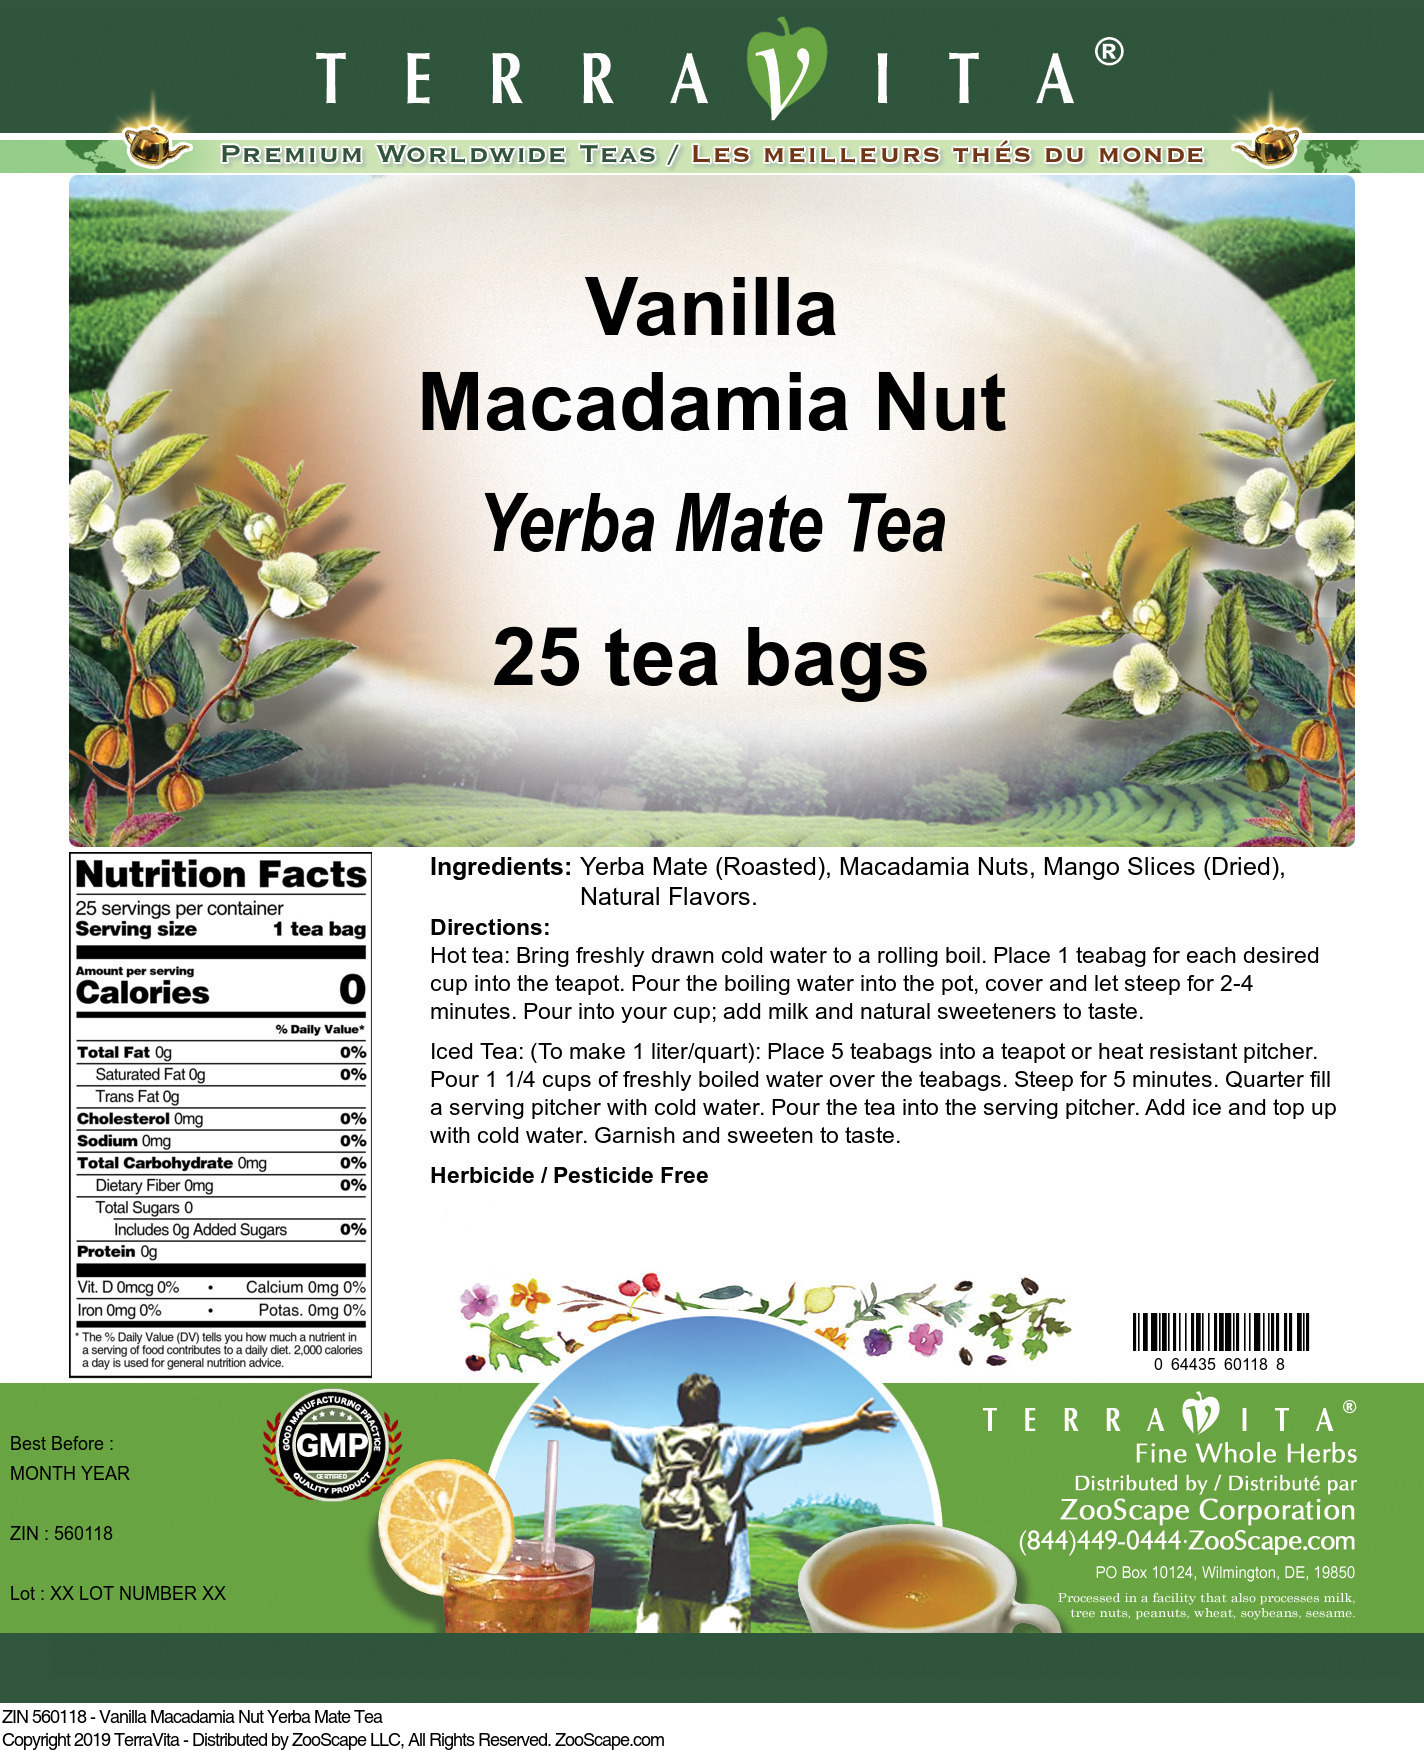 Vanilla Macadamia Nut Yerba Mate Tea - Label